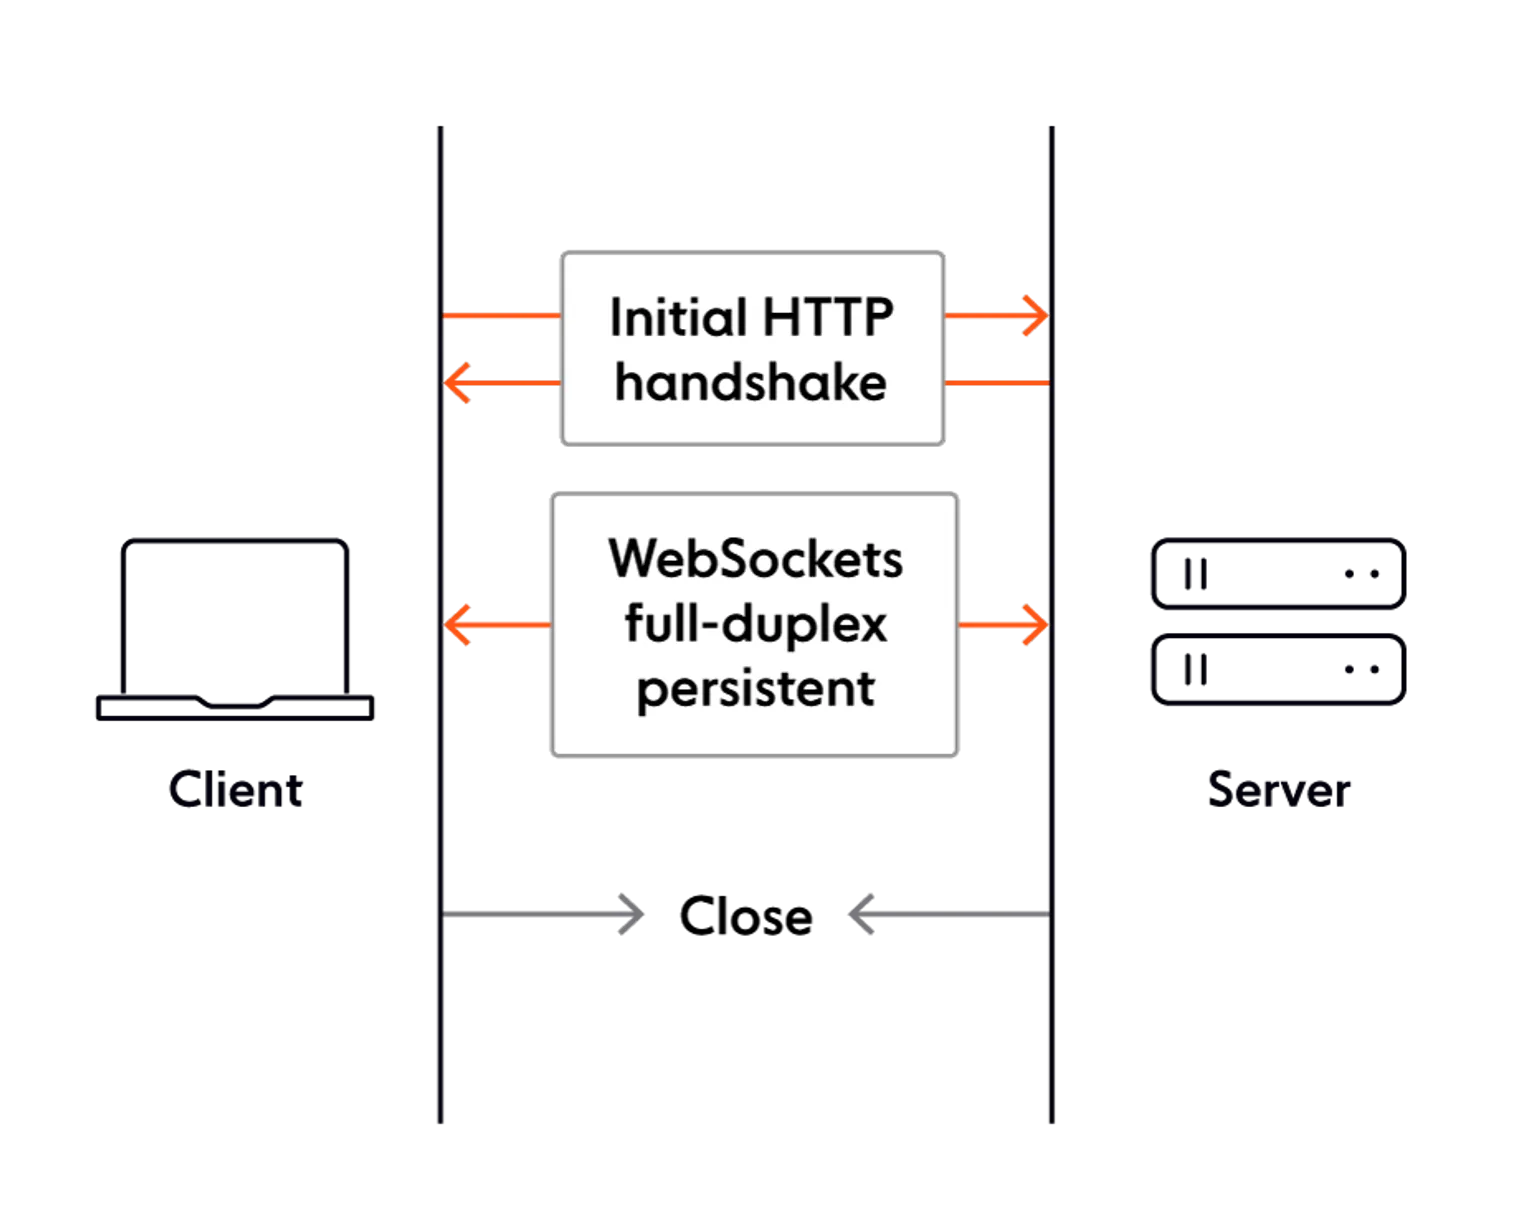 WebSockets overview